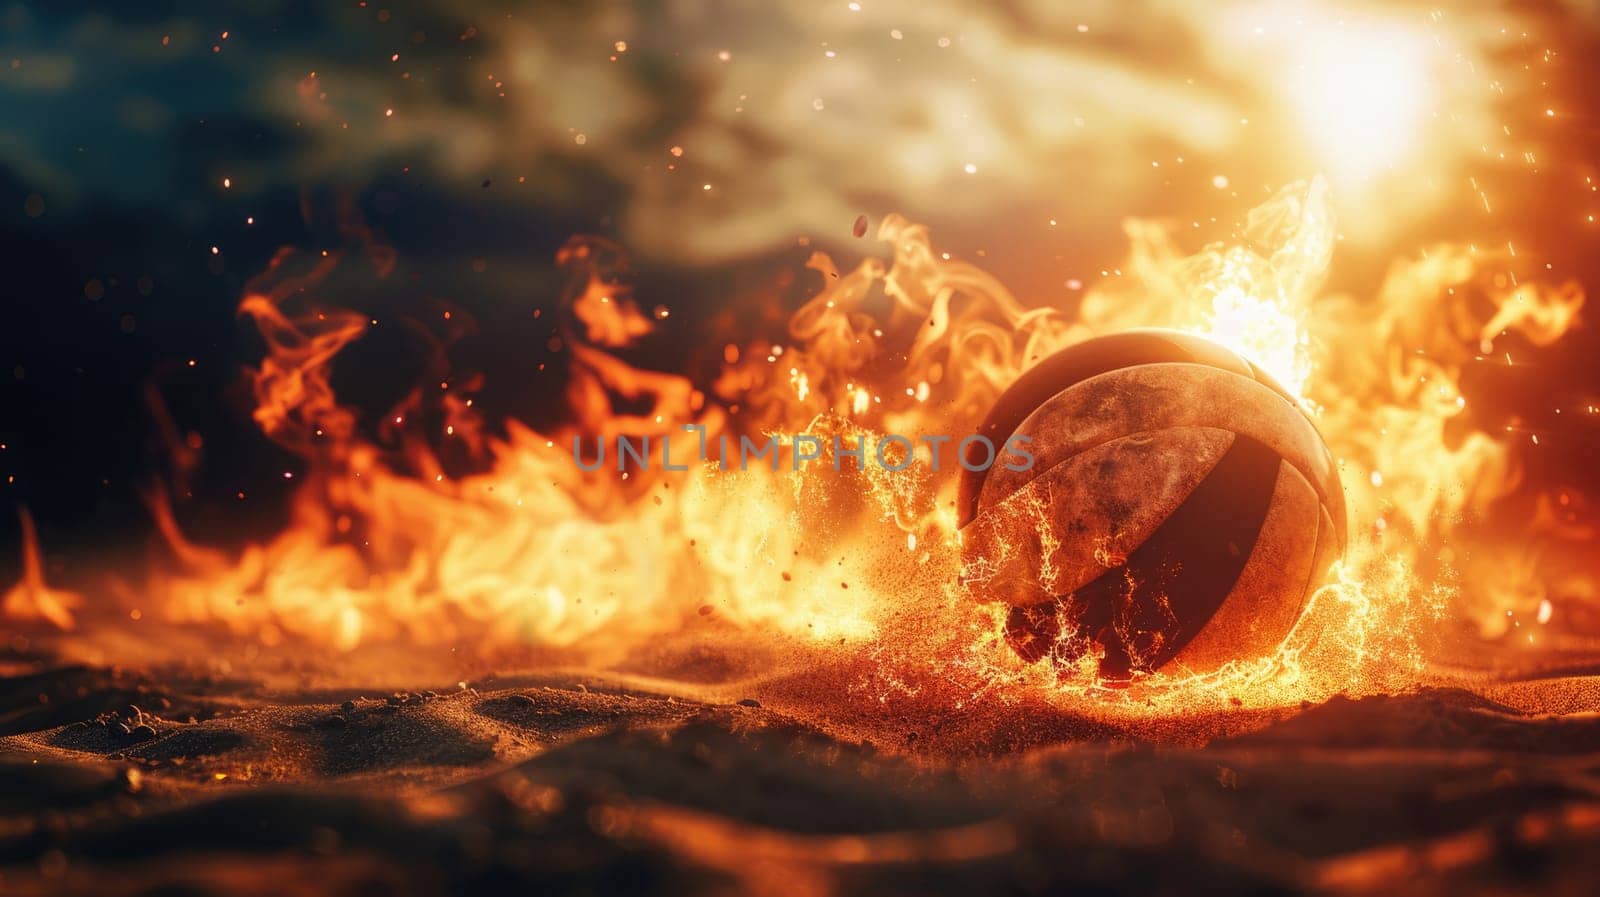 Beach volleyball ball in abnormal blazing heat by natali_brill